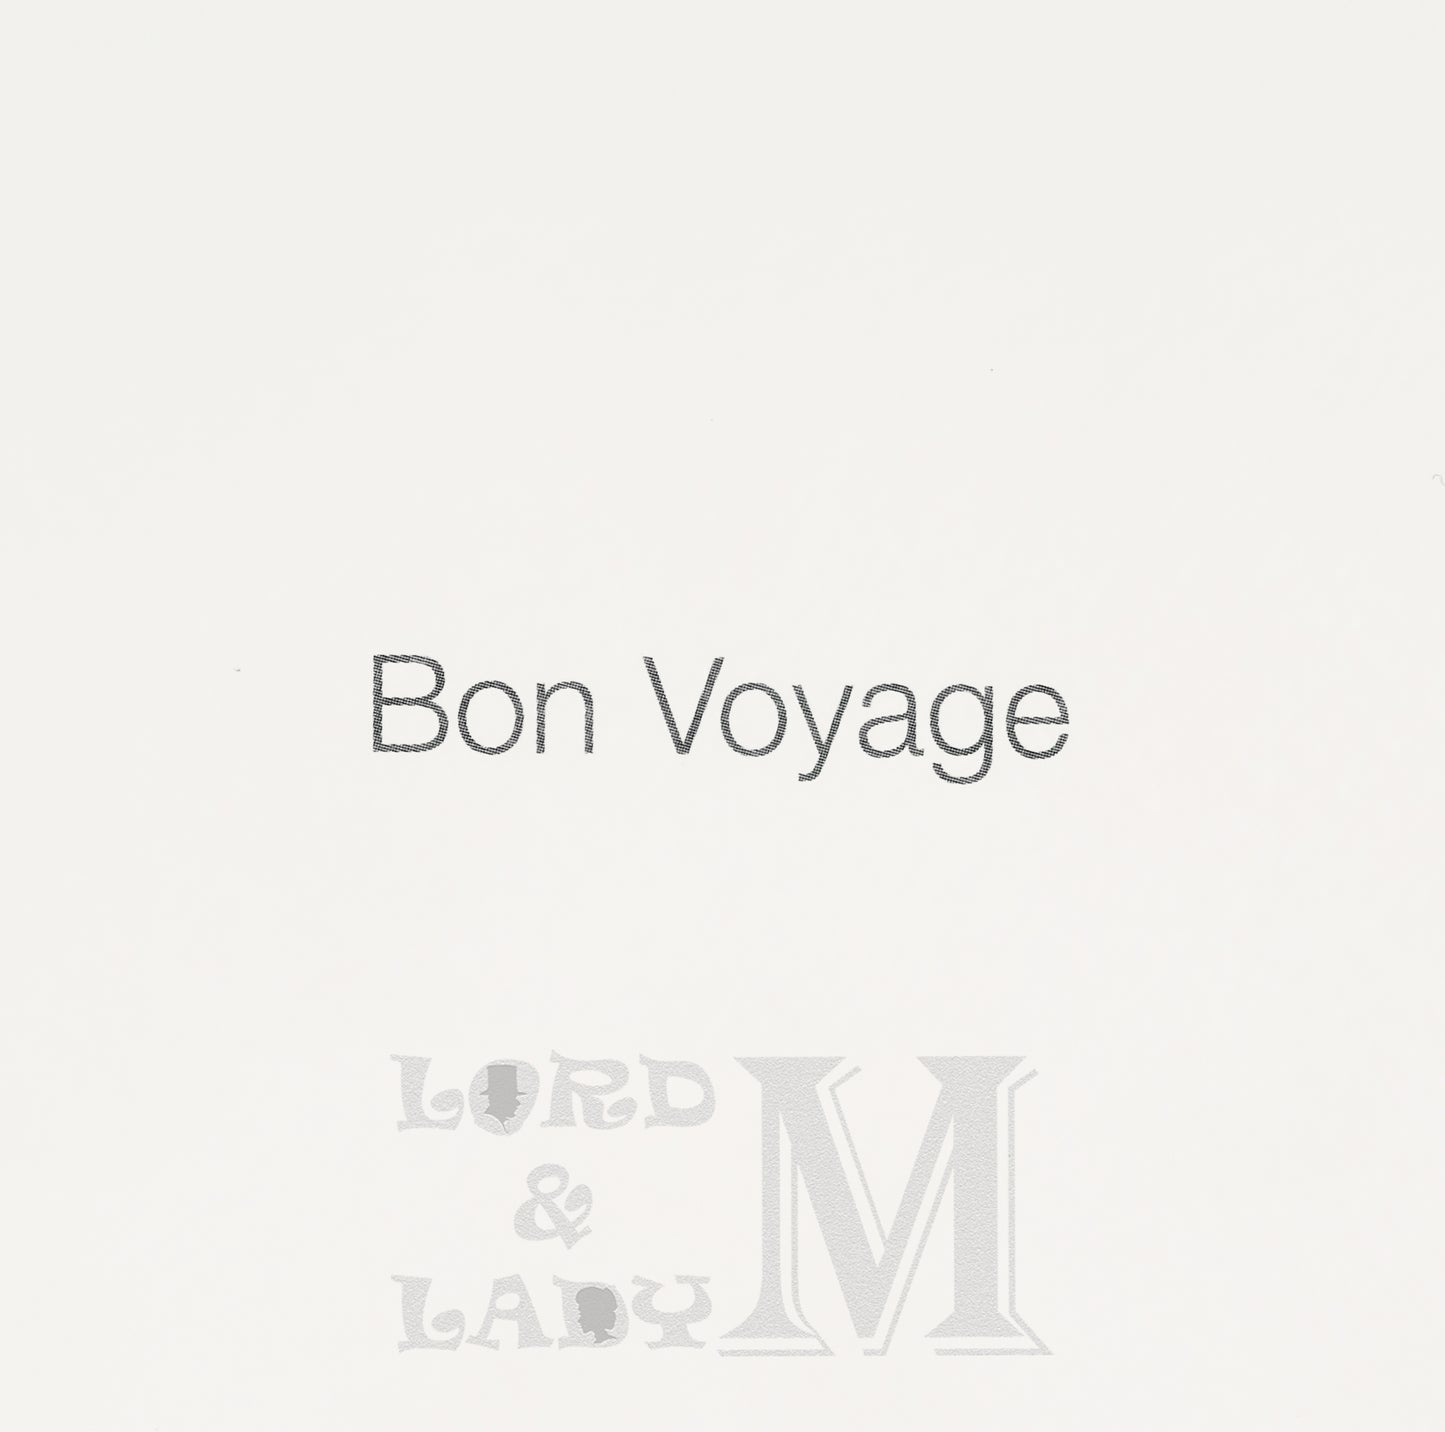 16cm - Bon Voyage! - Camper Van - E